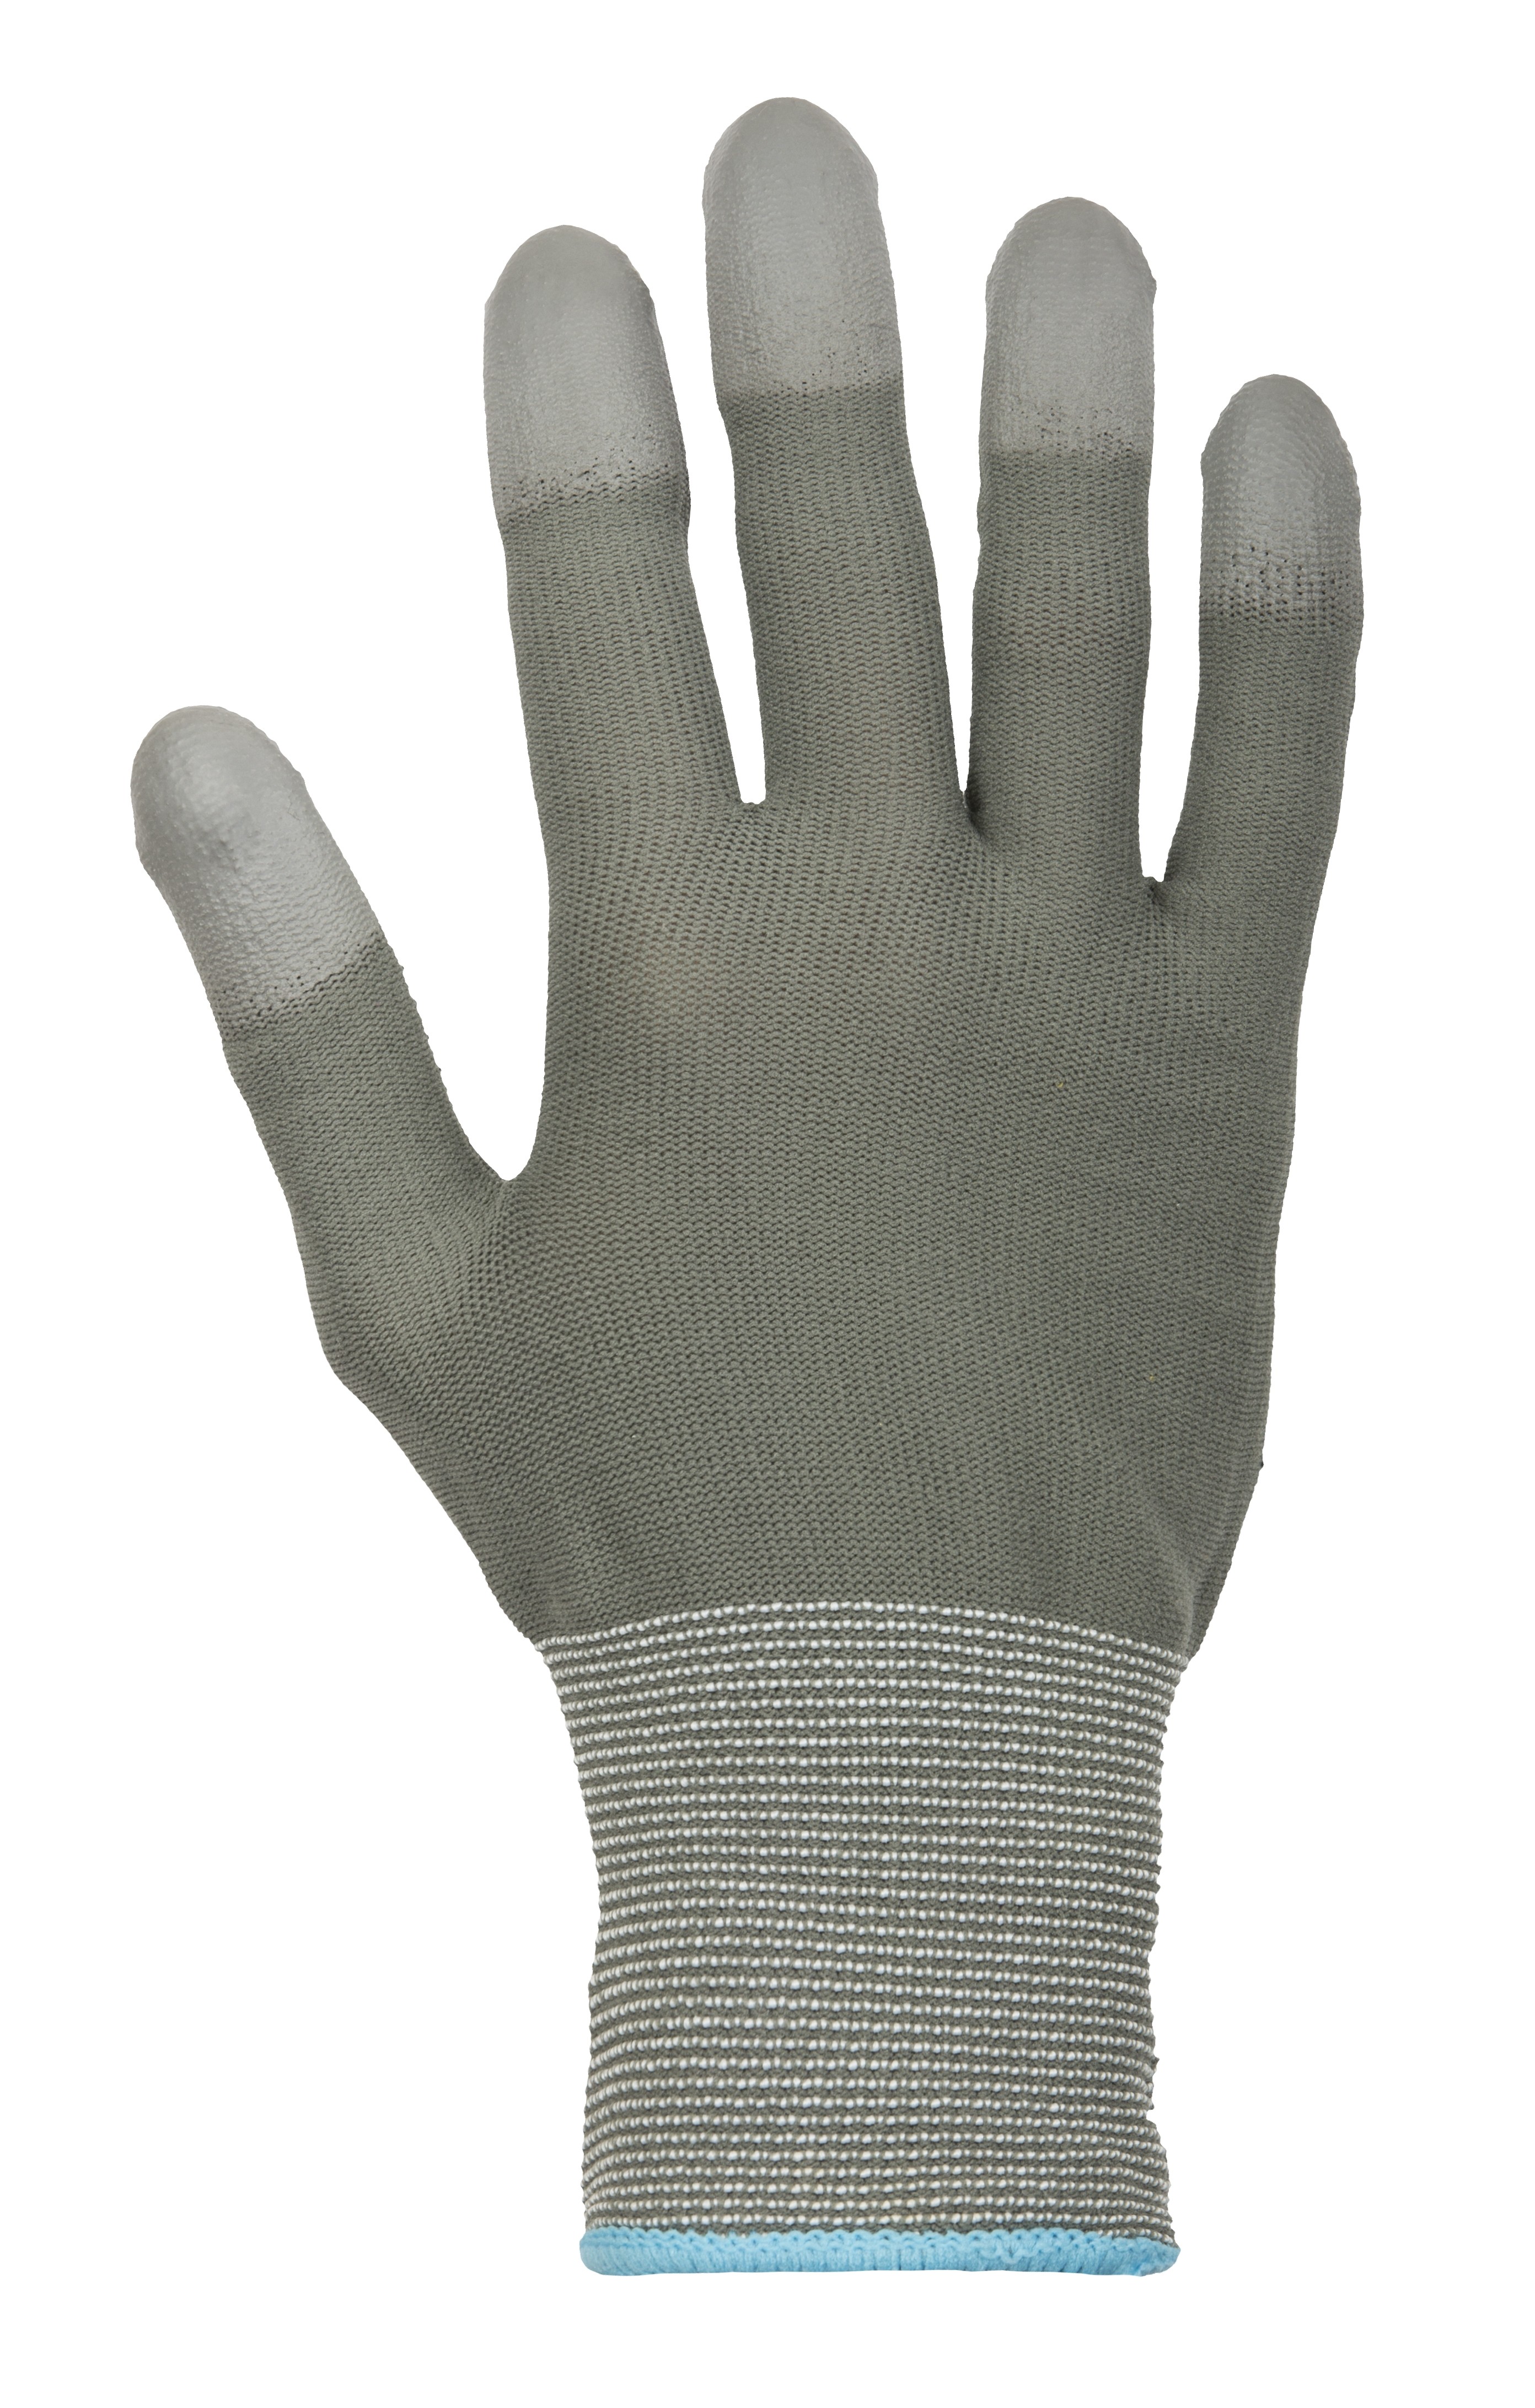 AVR gants de travail 11/XL nylon rouge